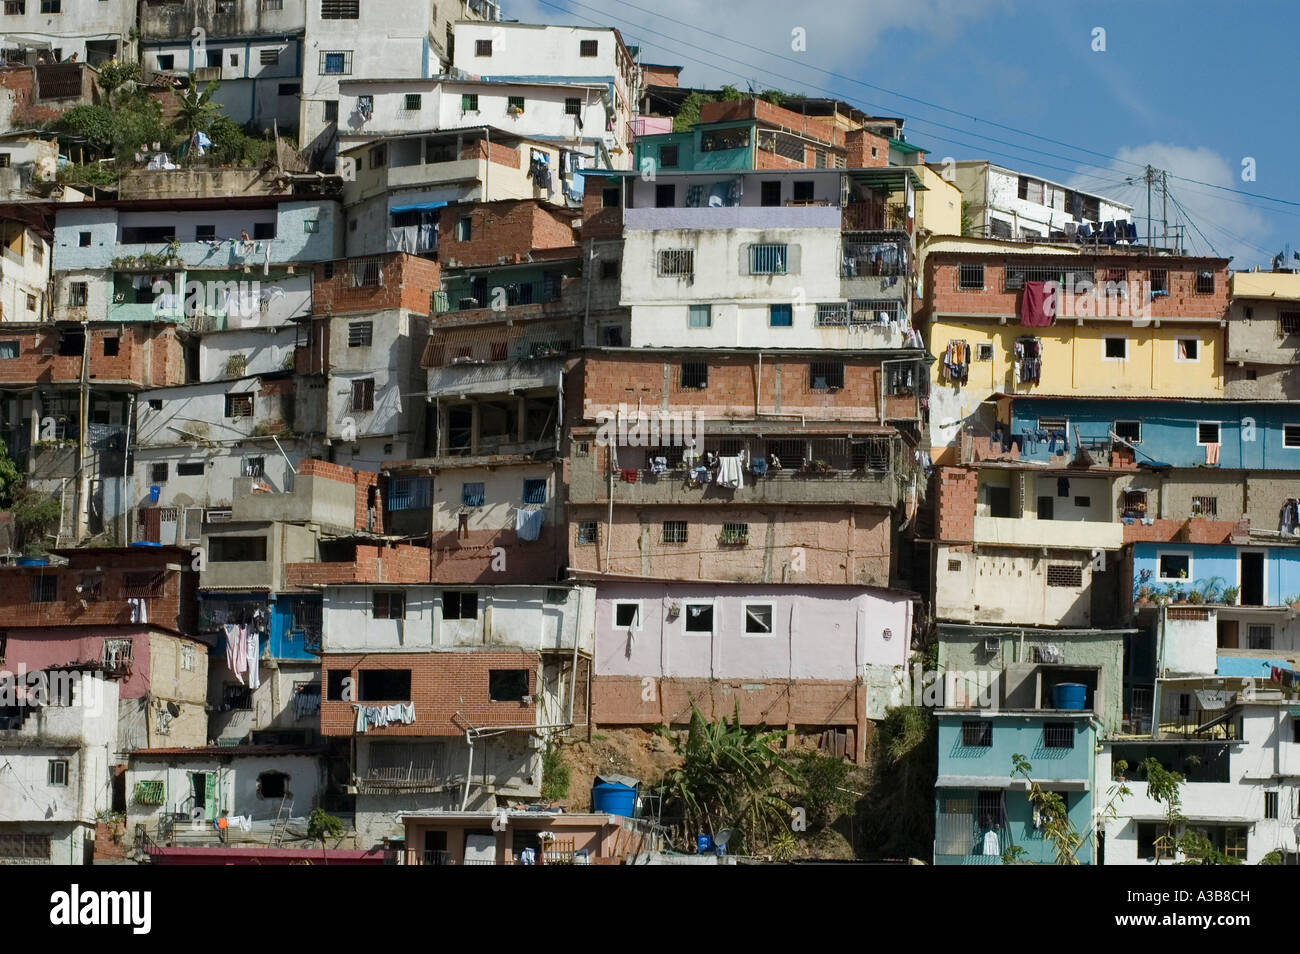 https://c8.alamy.com/comp/A3B8CH/venezuela-south-america-caracas-typical-low-income-slum-dwellings-A3B8CH.jpg